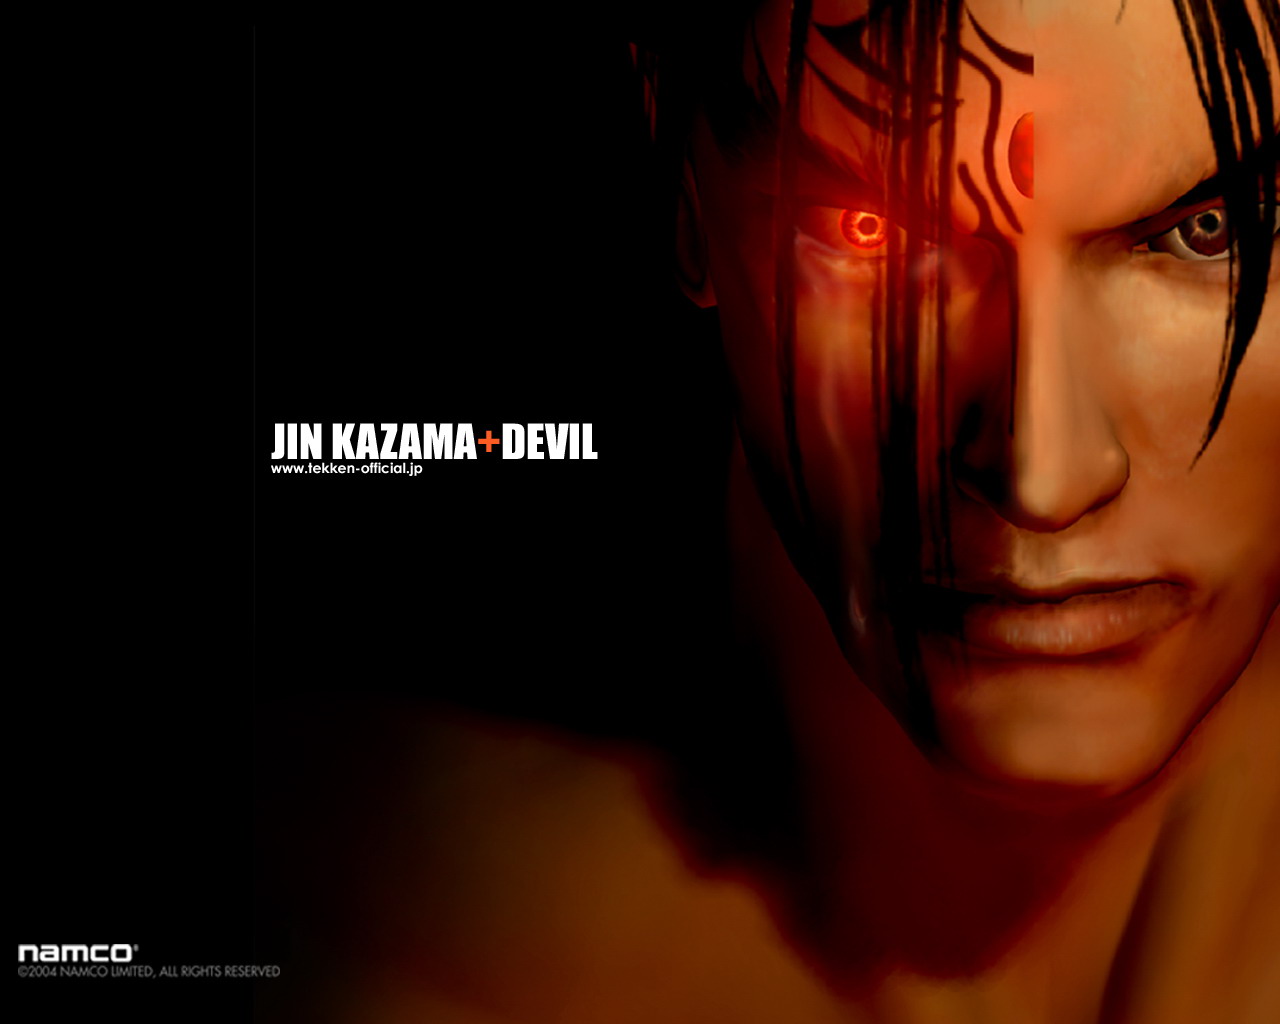 A História de Kazuya Mishima - Histórias de Tekken 